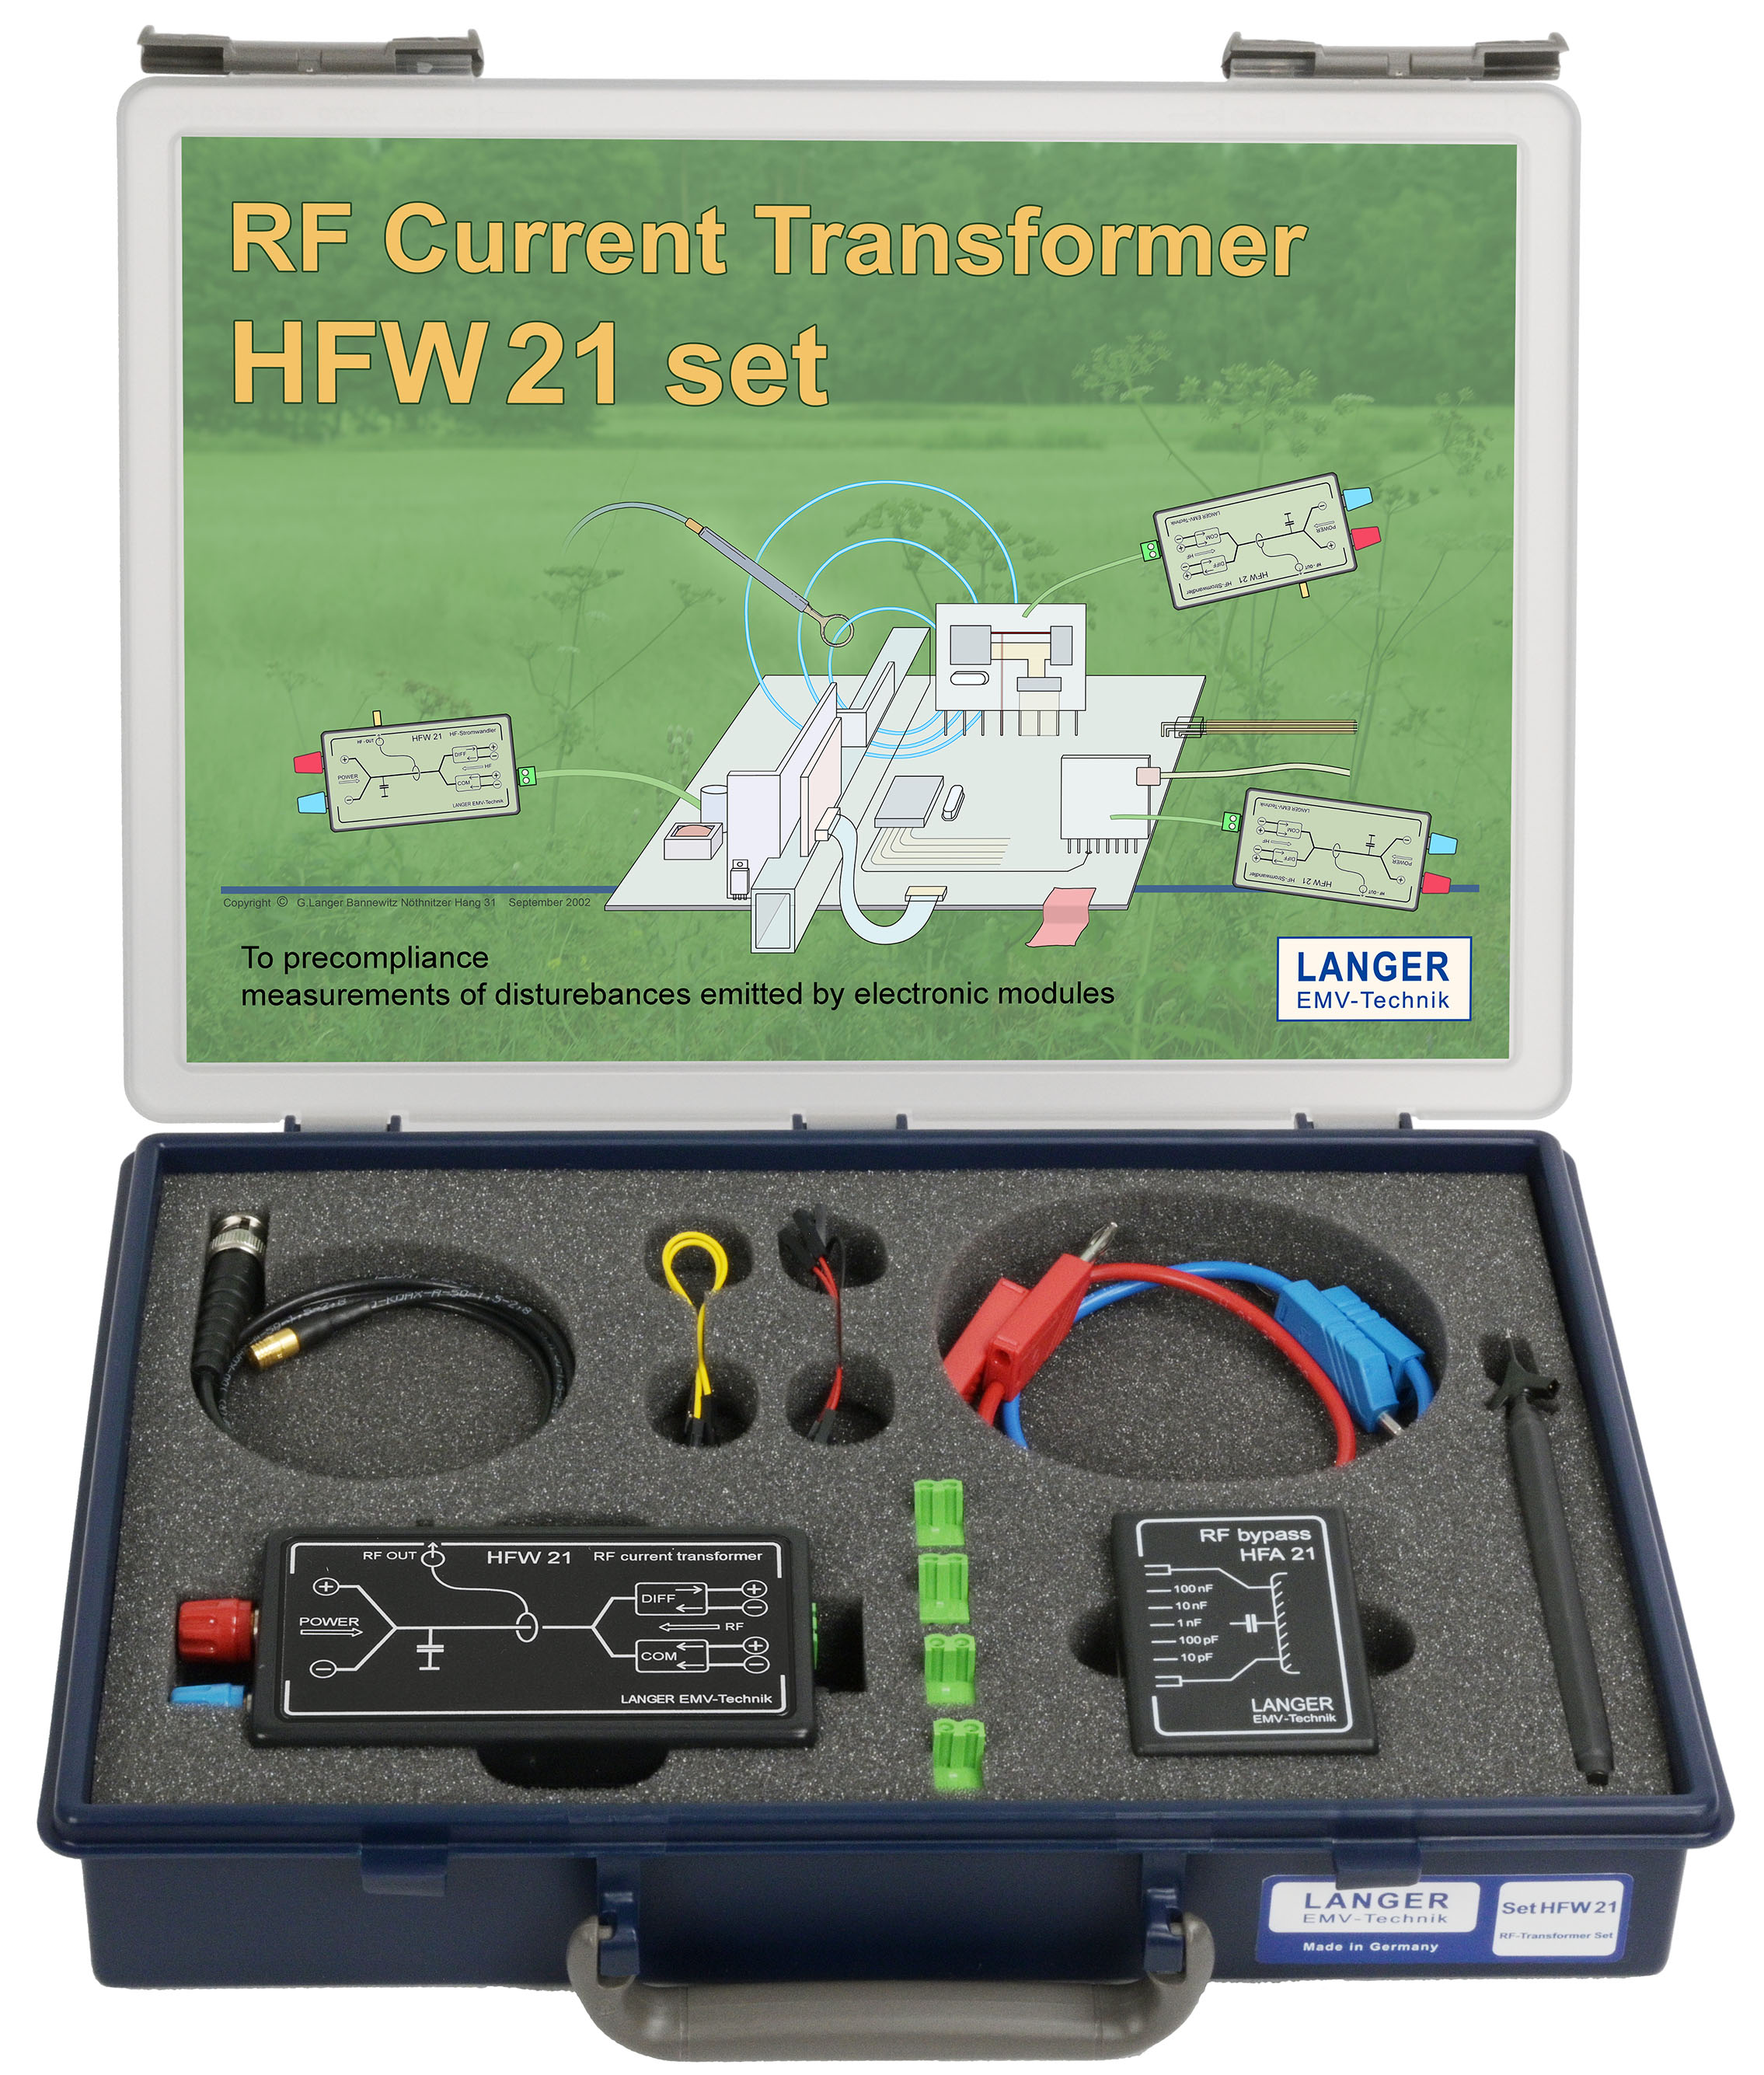 HFW 21 set, RF Current Transformer 100 kHz up to 1 GHz